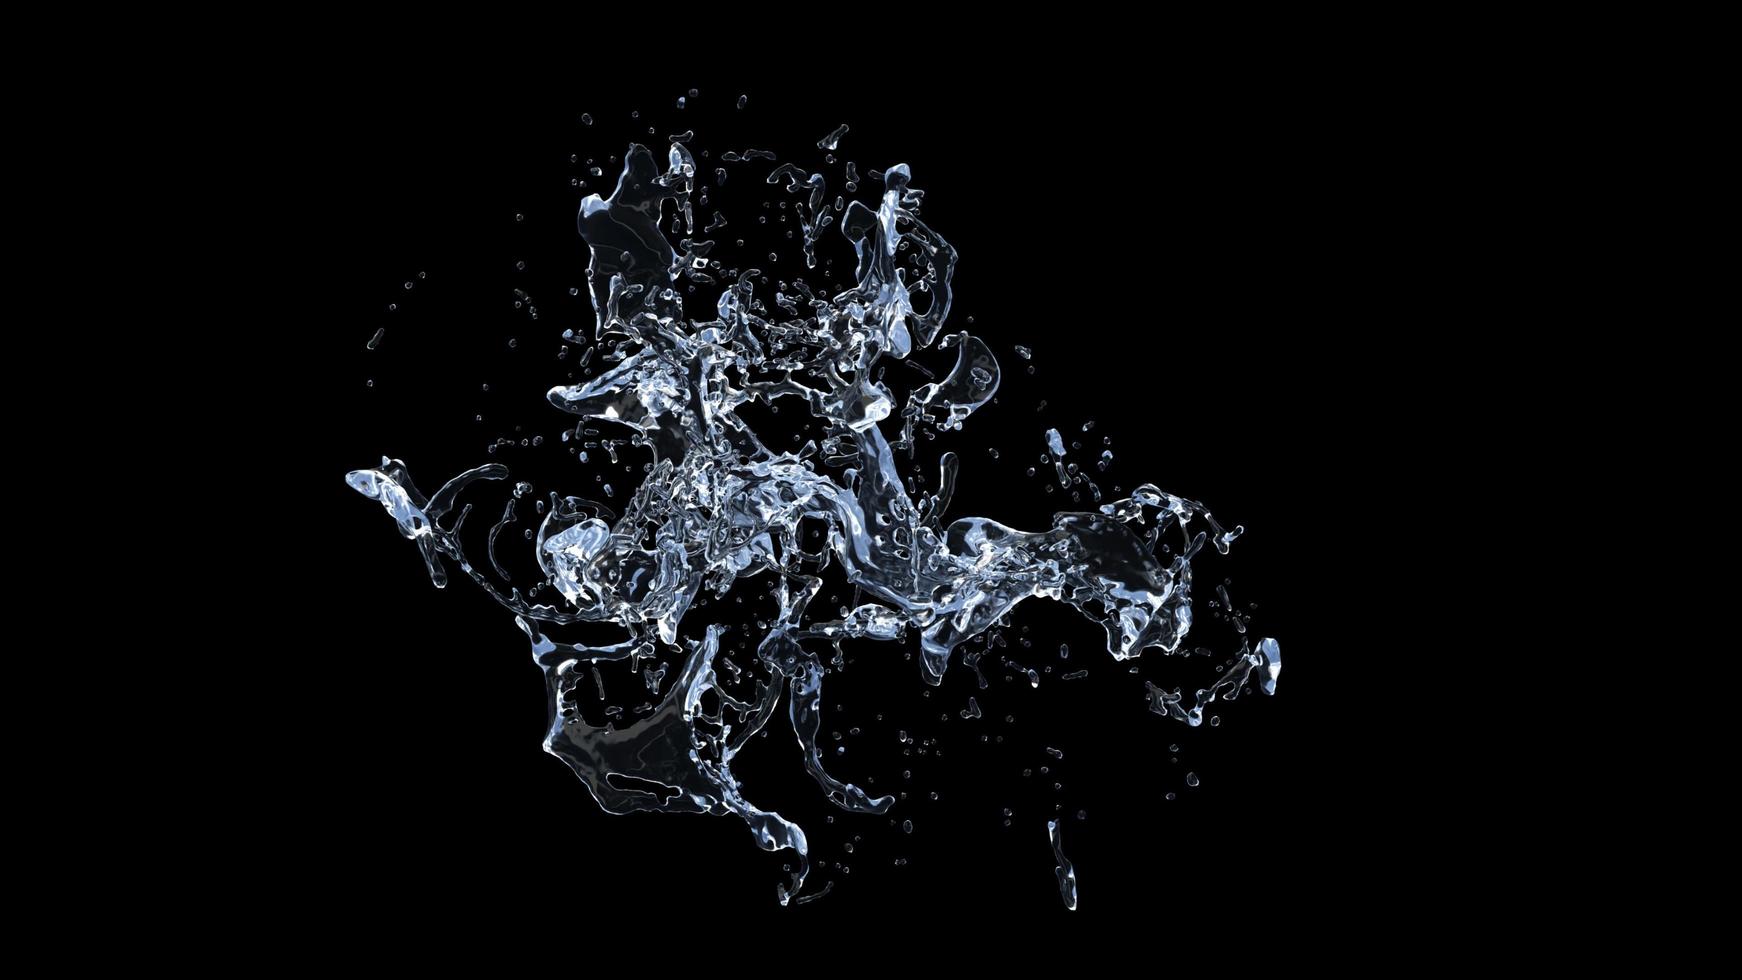 Water Splash with droplets on black background. 3d illustration. photo